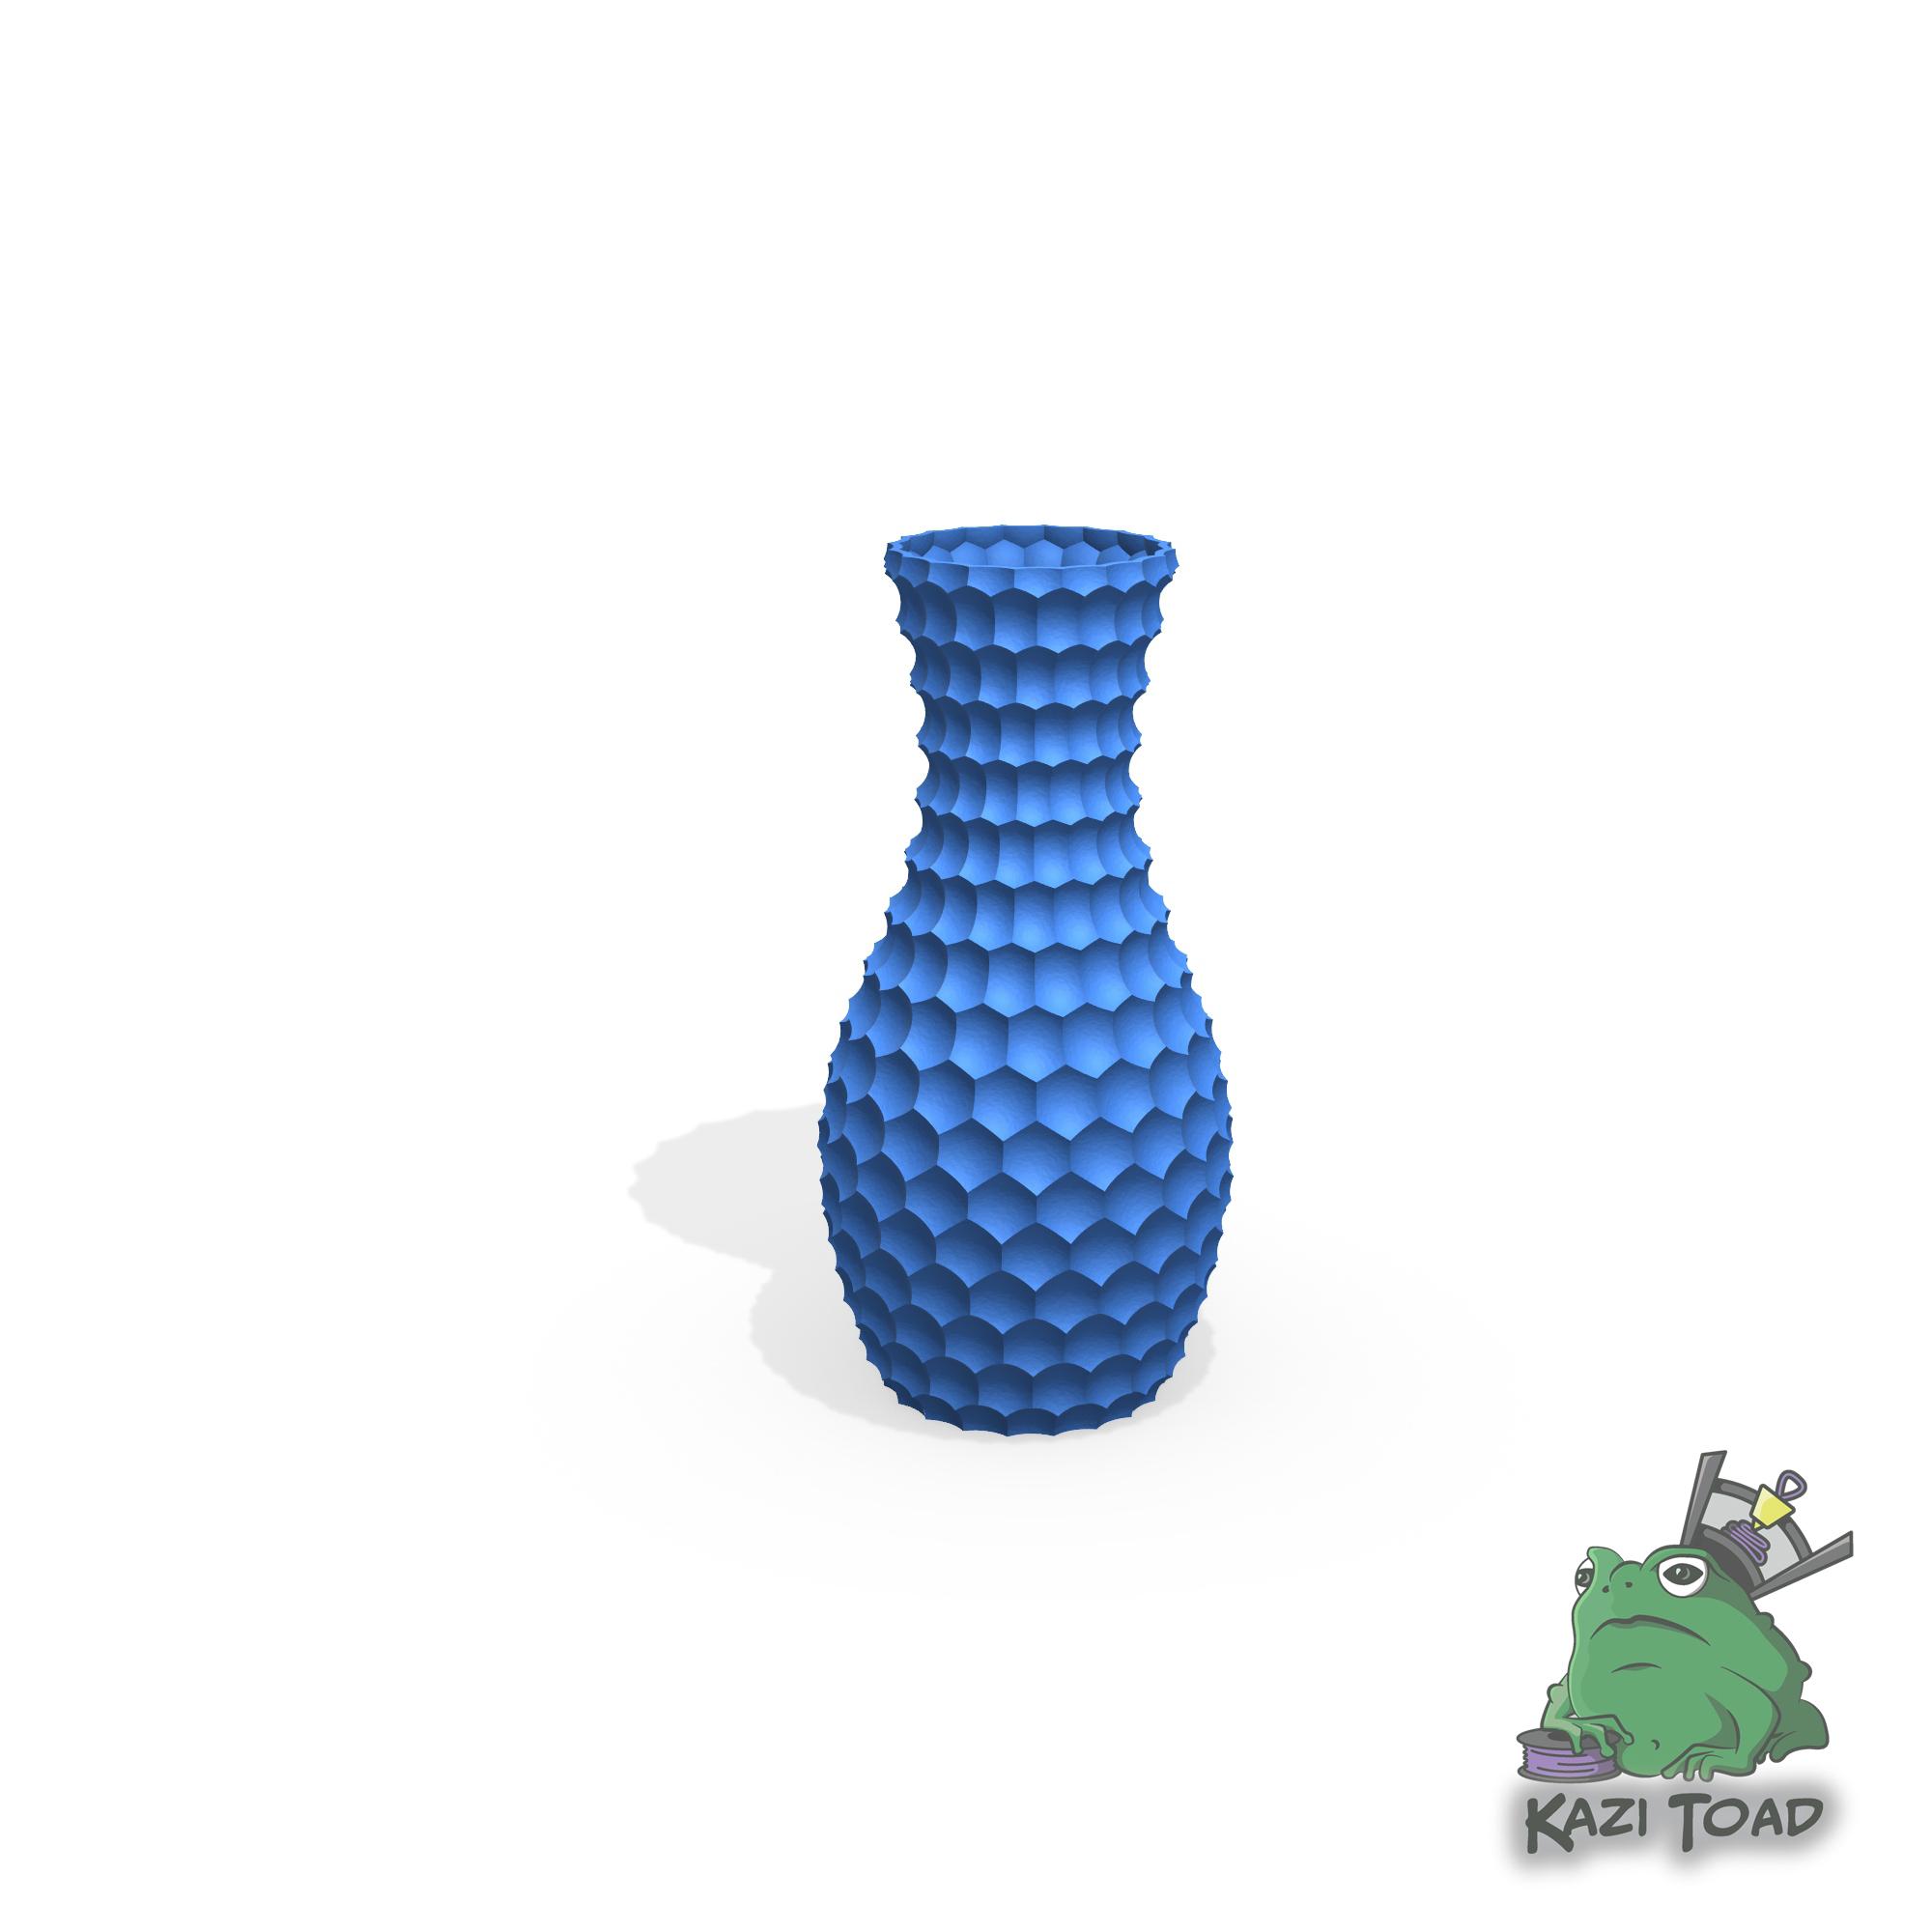 Honeycomb vase (Vase No. 12) 3d model